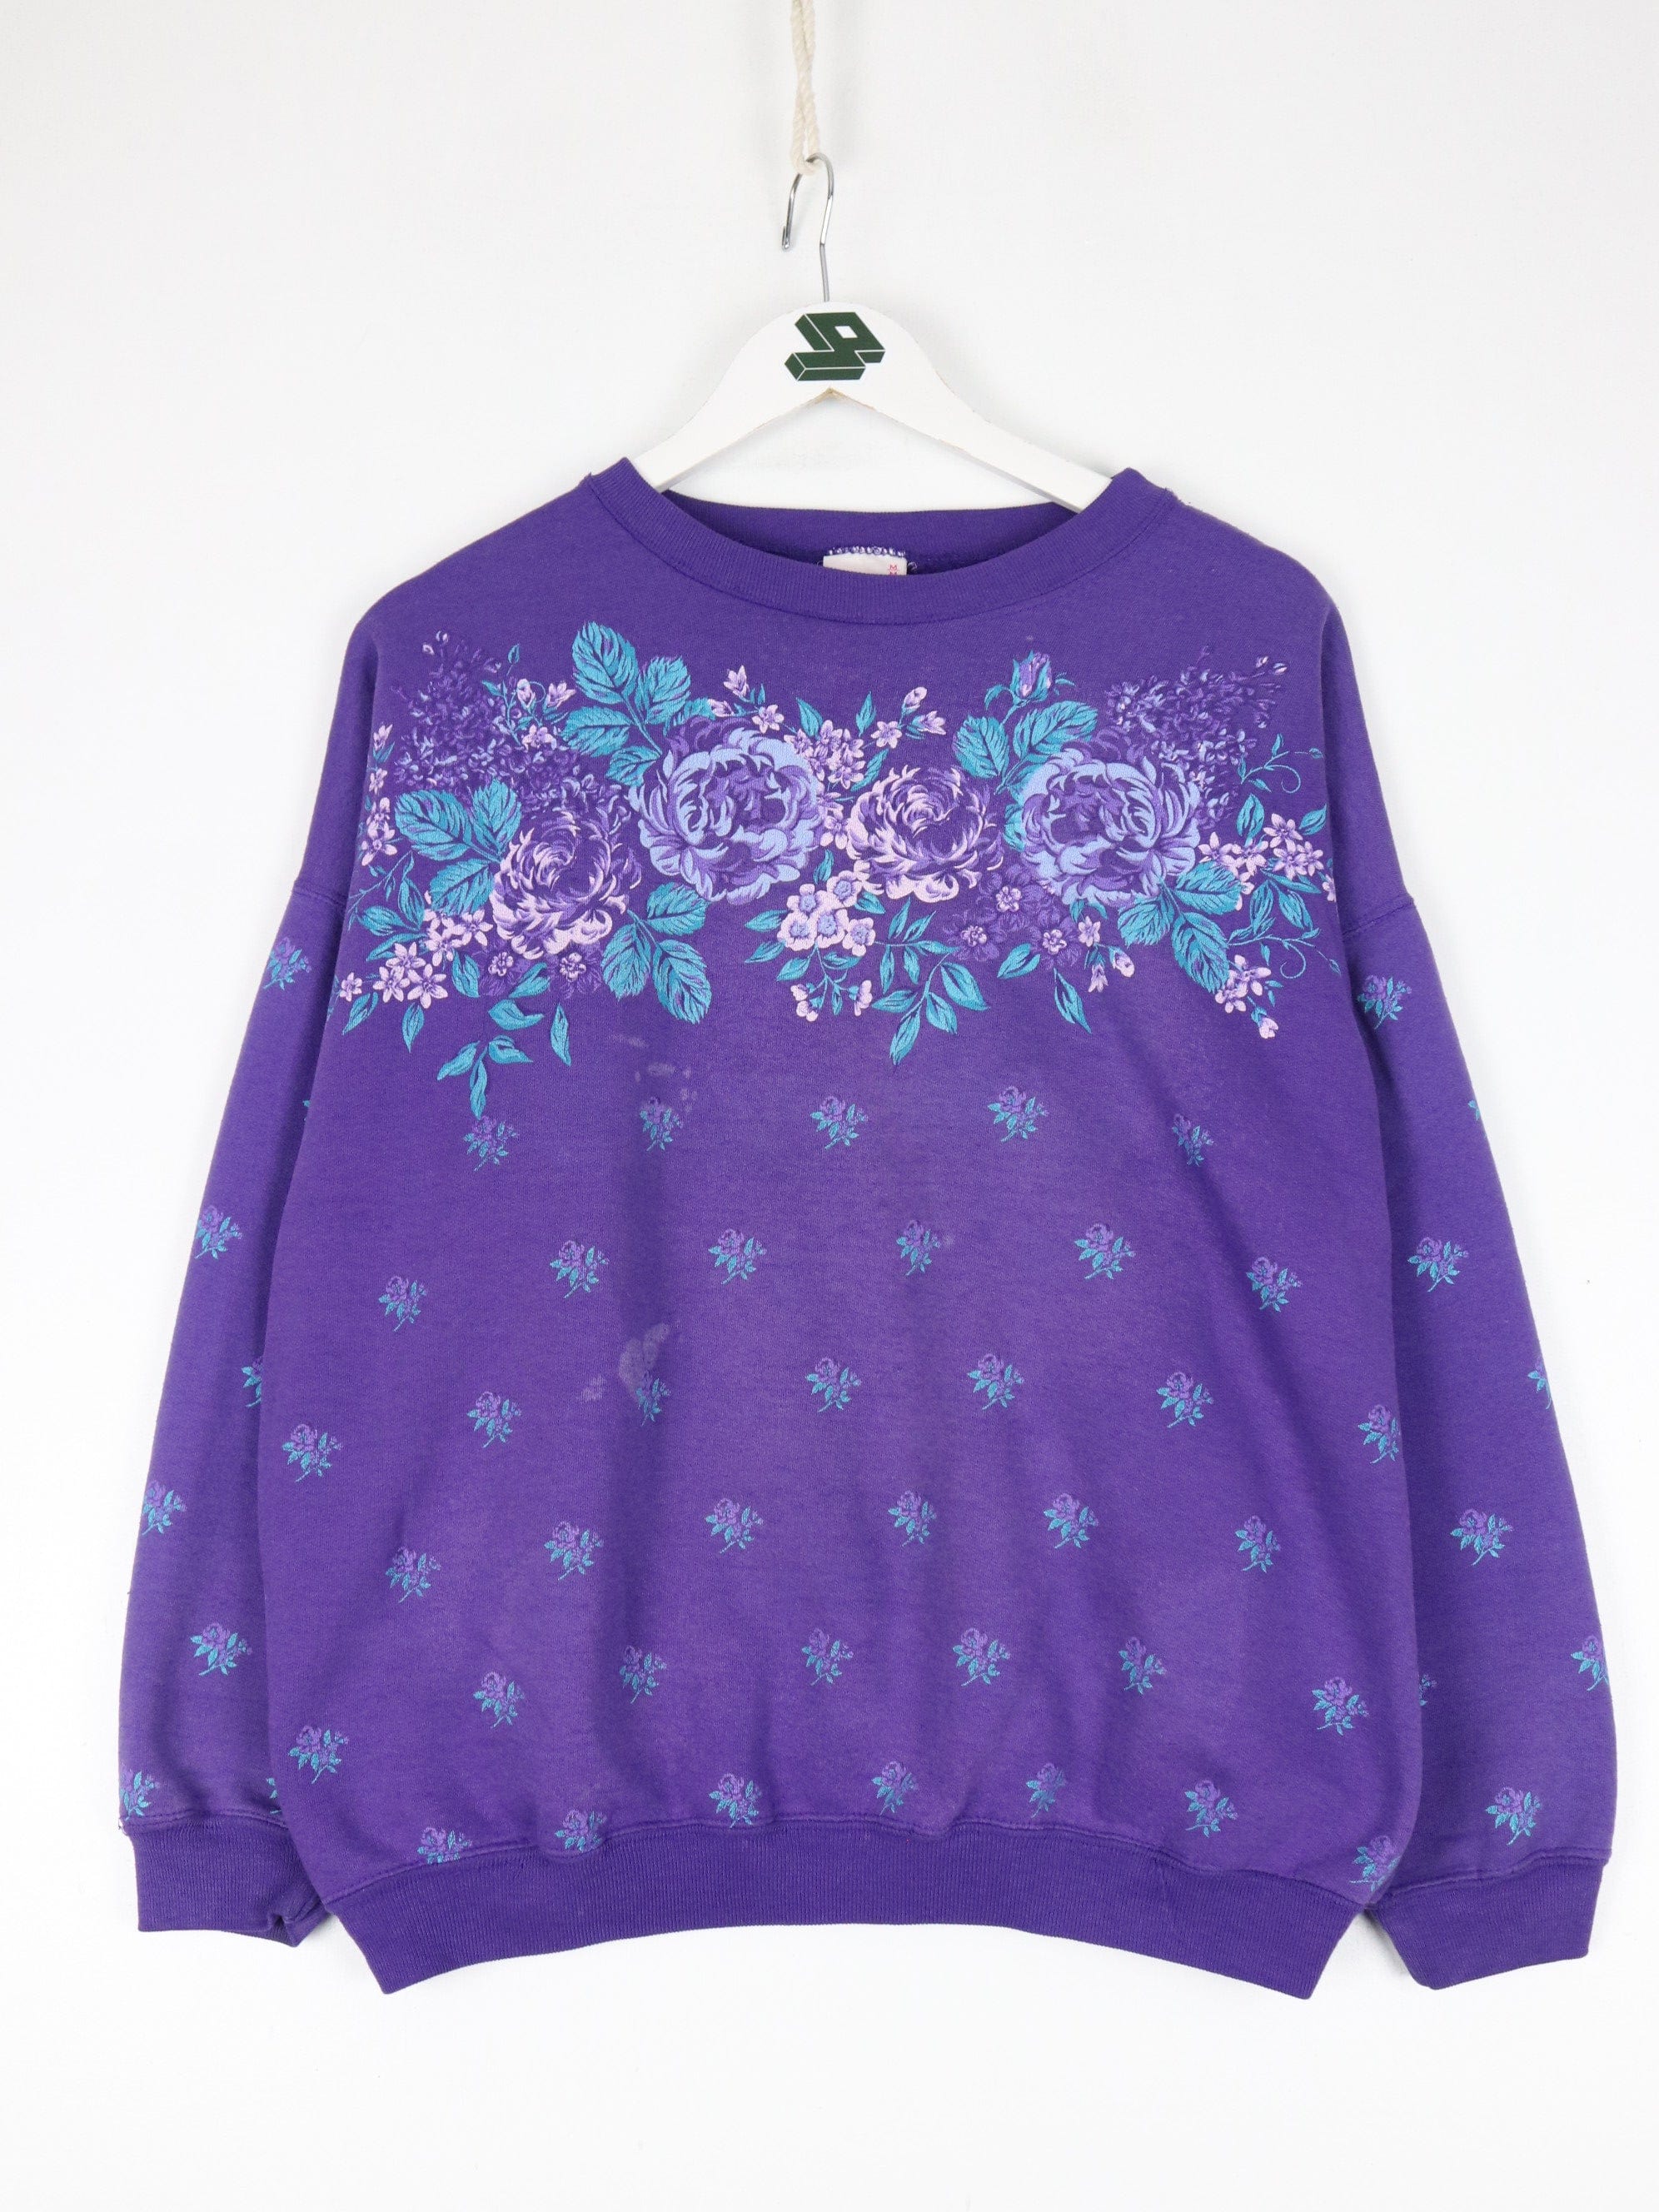 Vintage Lady Foot Locker Sweatshirt Womens Medium Purple Floral